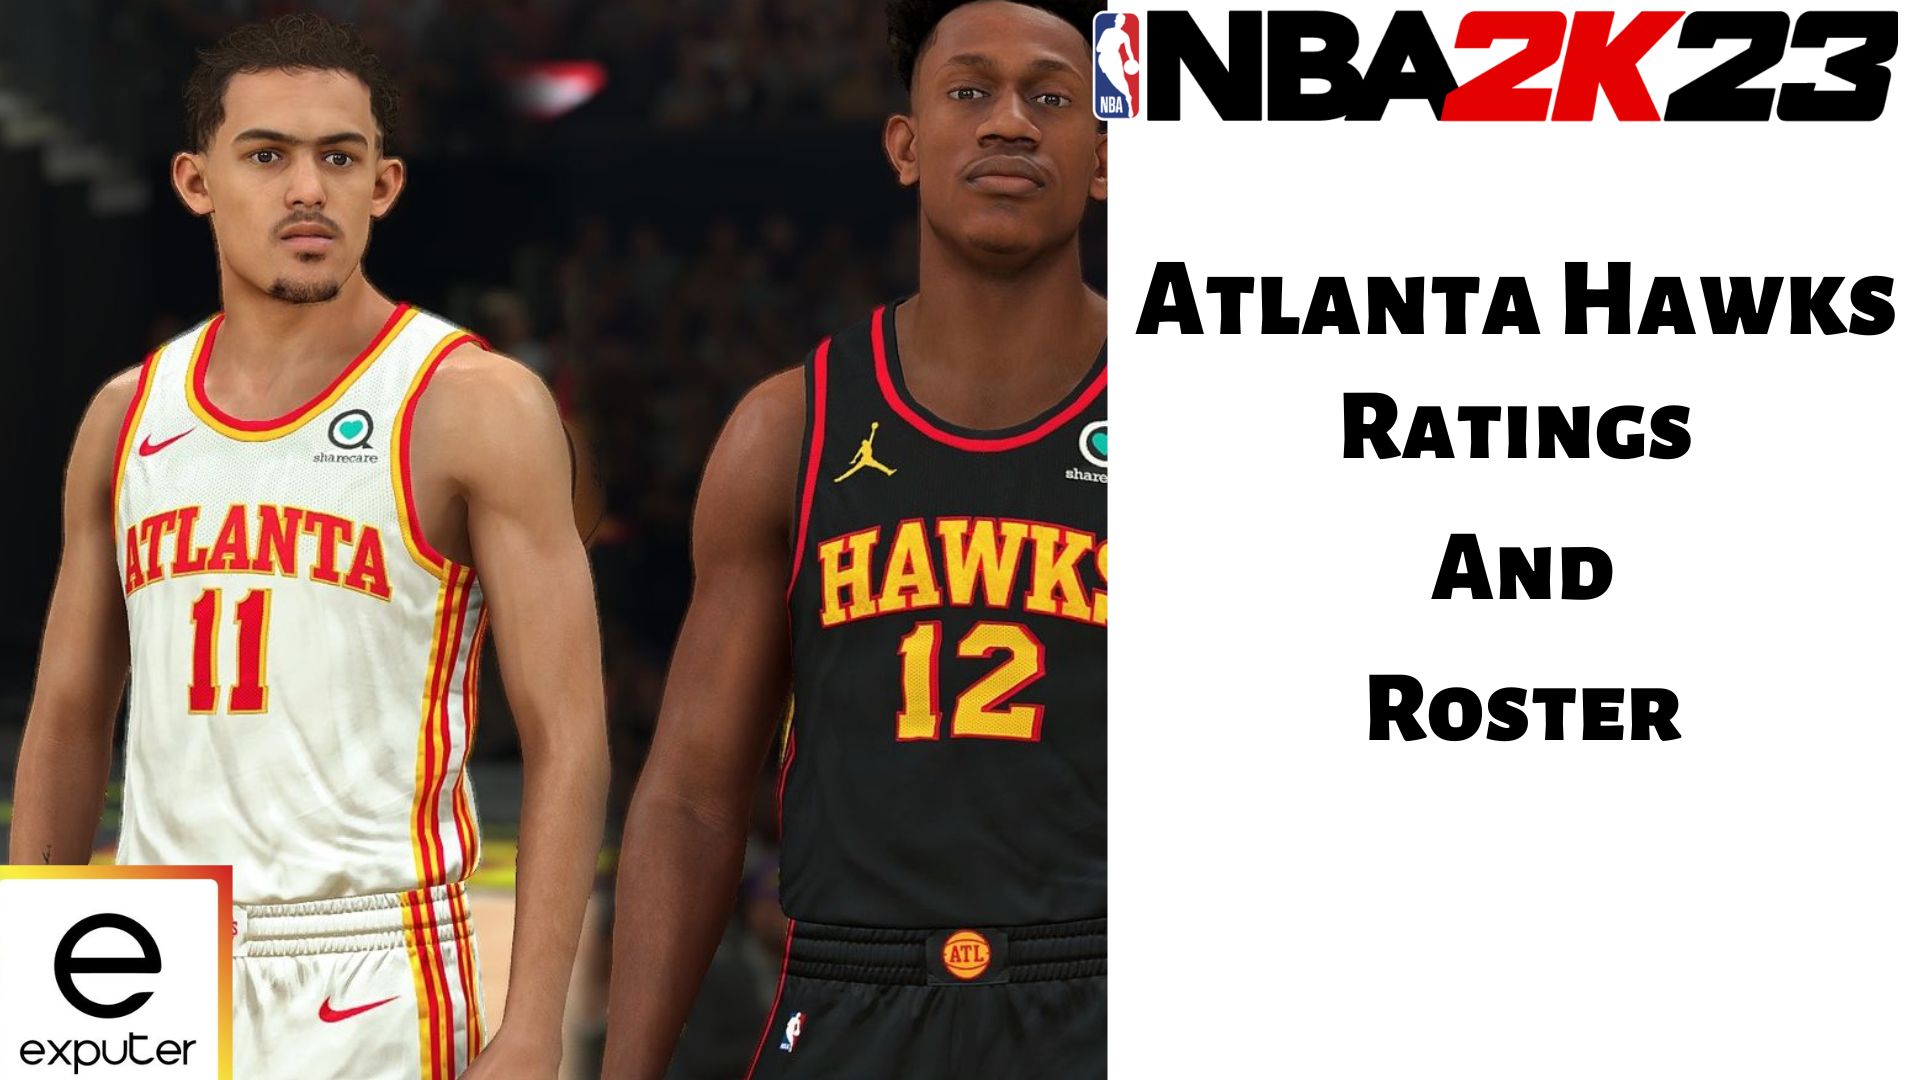 Atlanta Hawks: John Collins NBA 2K20 Rating Revealed